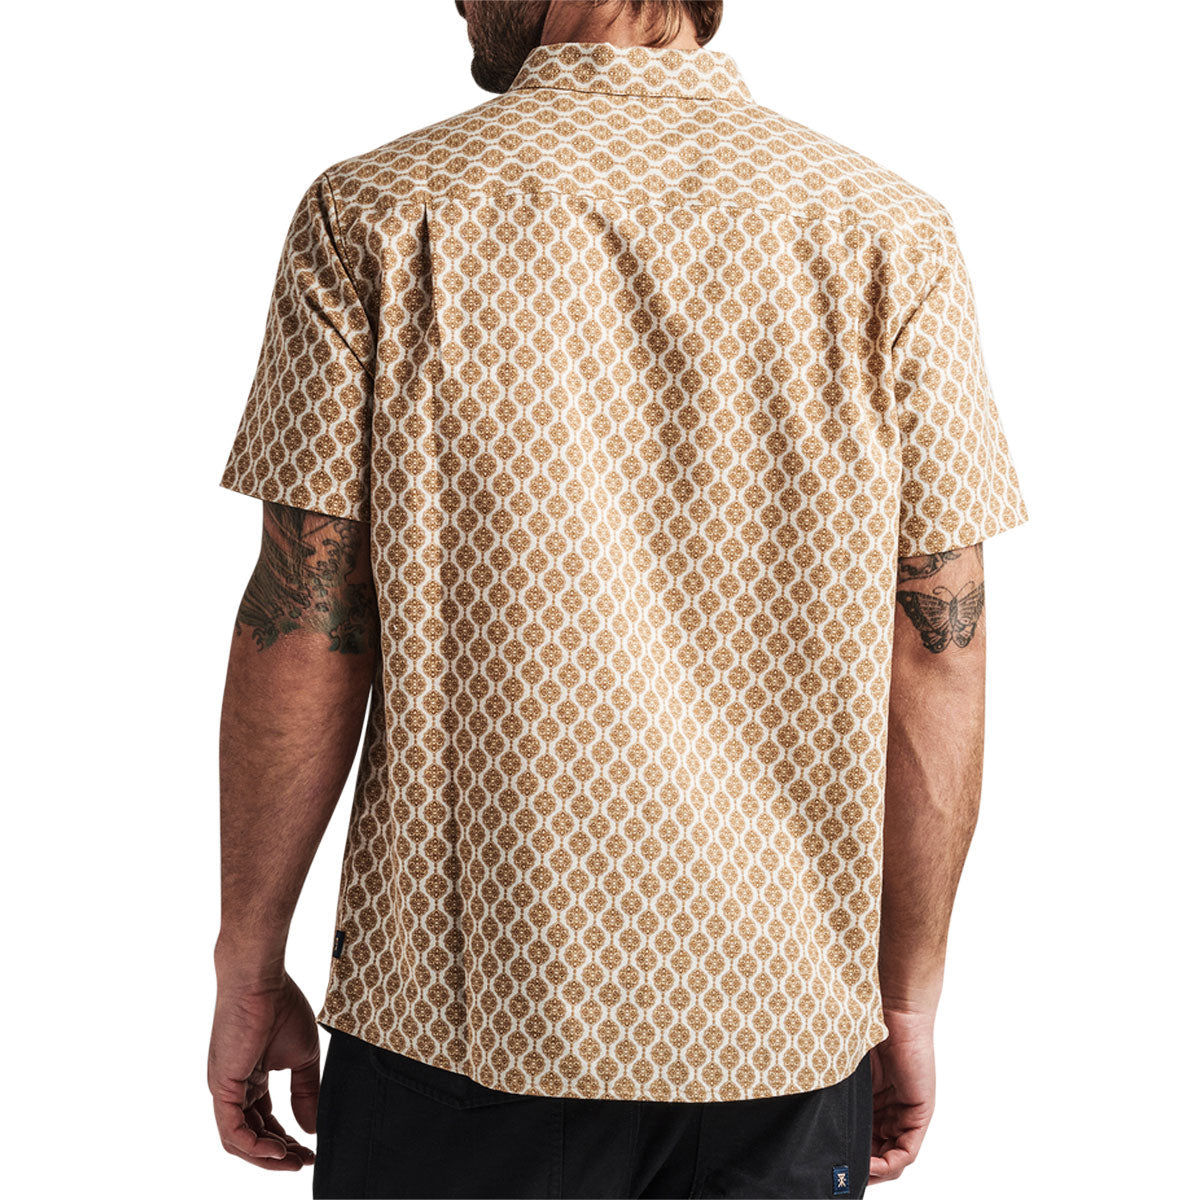 Roark Scholar Oxford Woven Shirt - Pignoli image 2